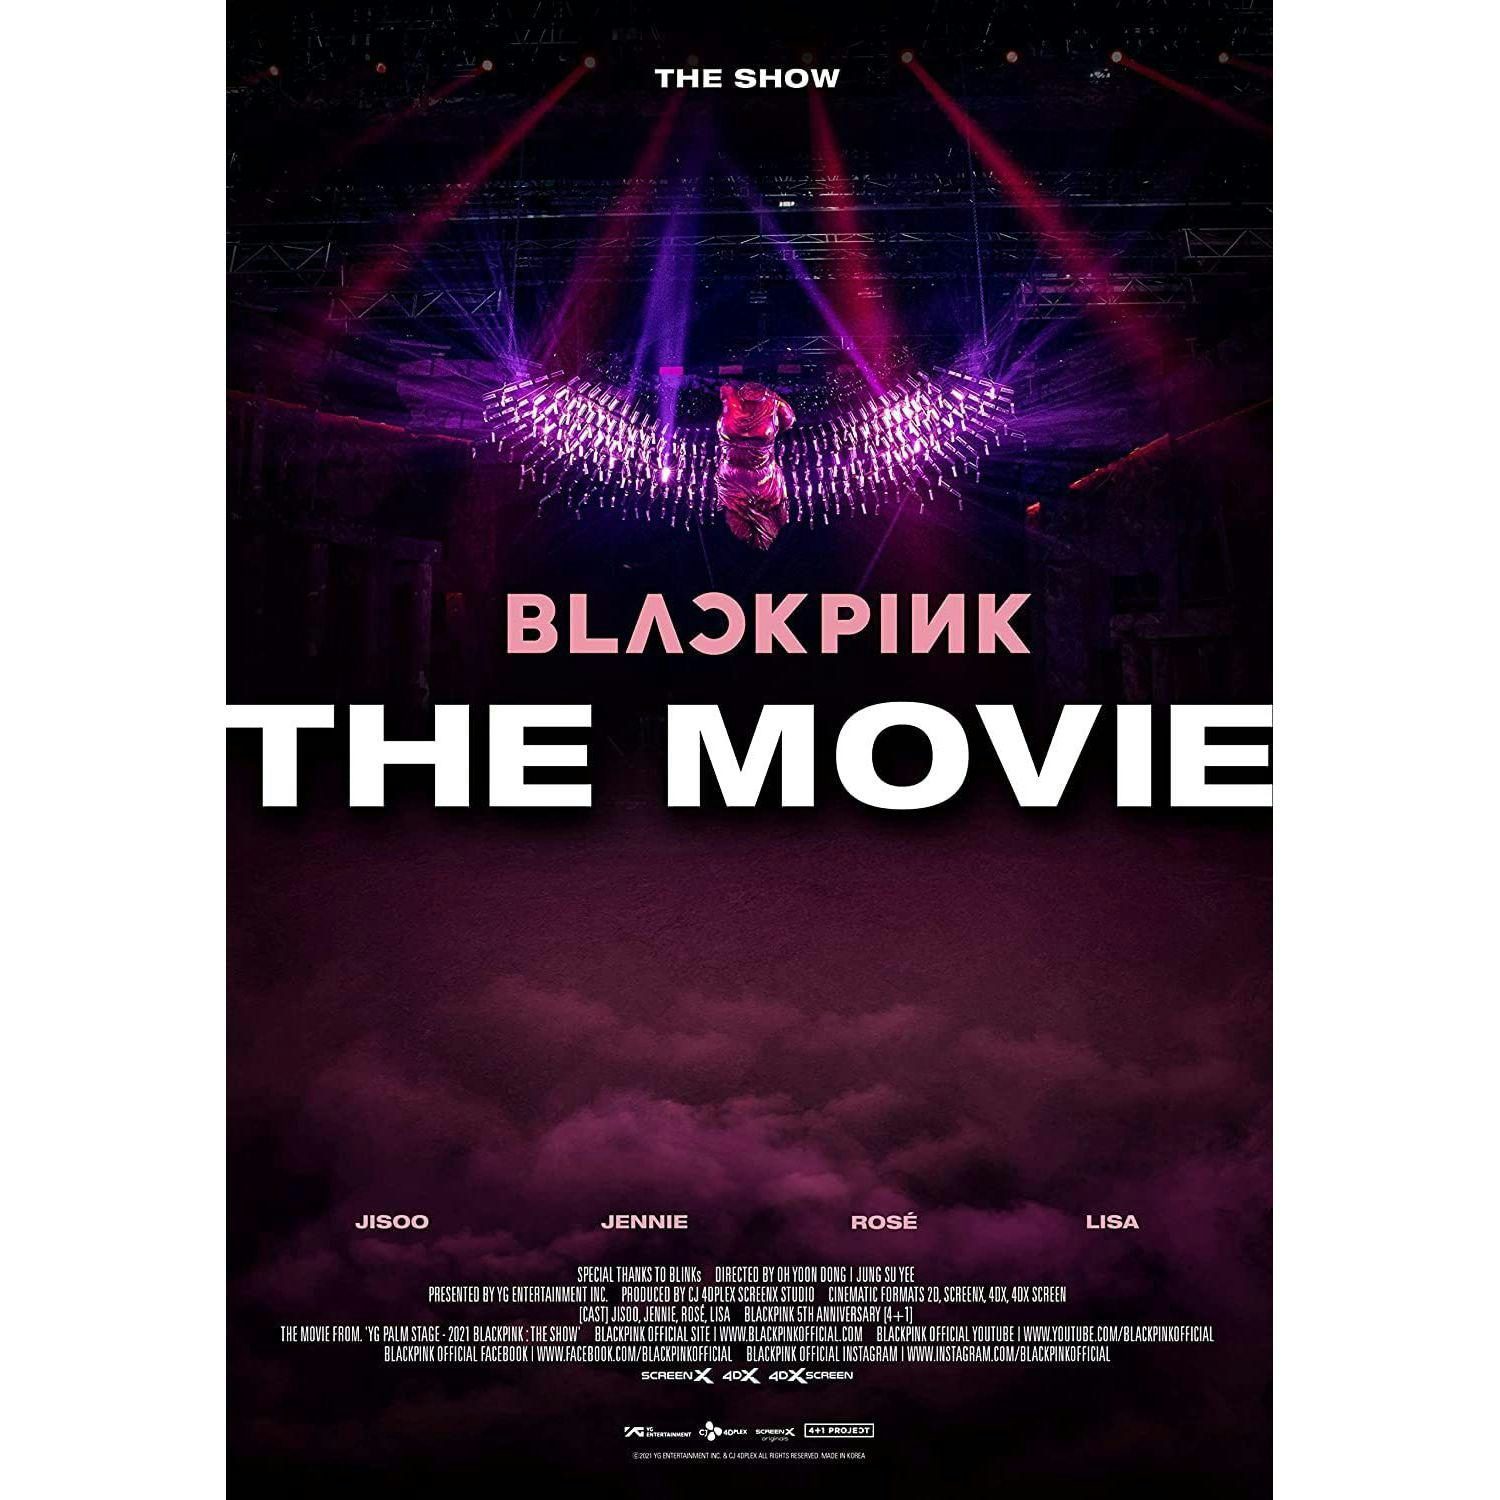 BLACKPINK THE MOVIE (PREMIUM EDITION) Blu-ray $129.99 